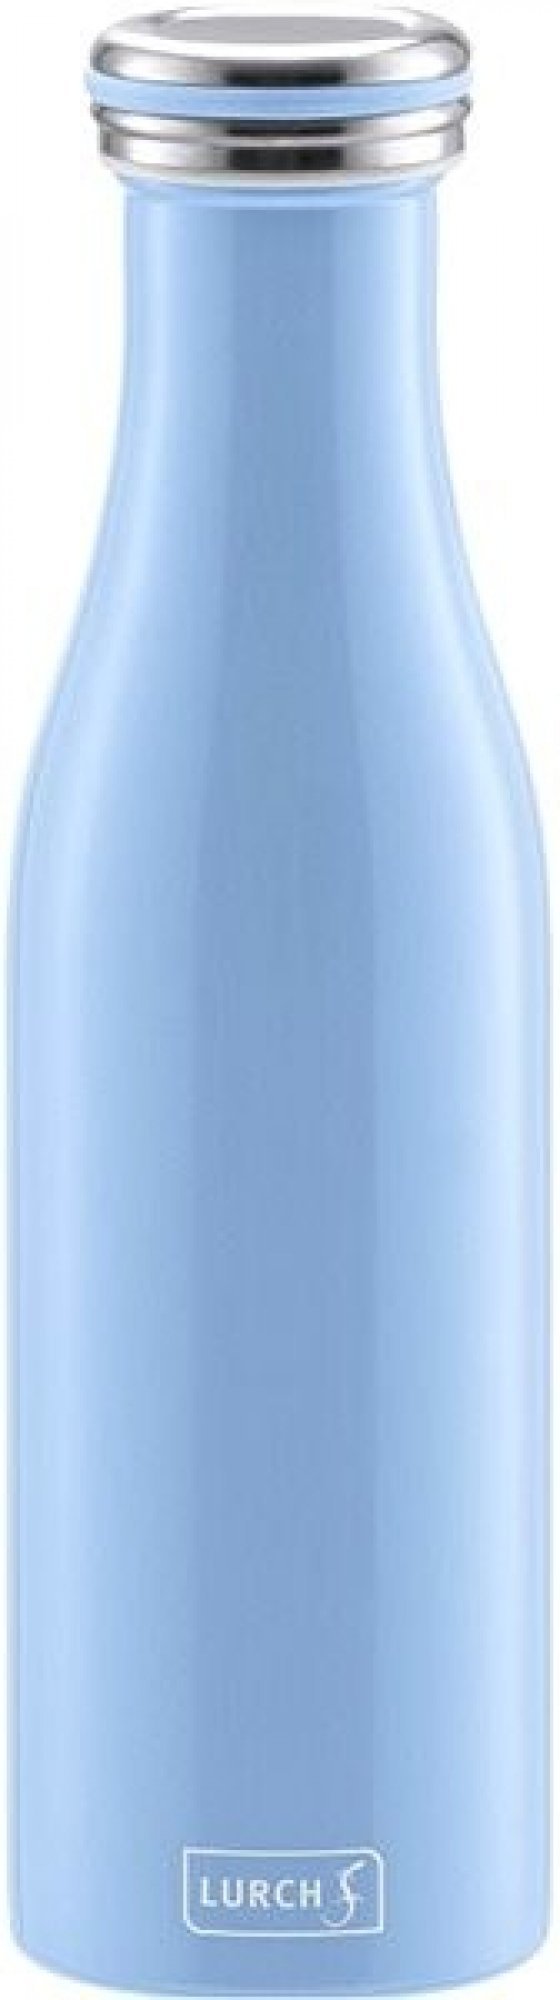 LURCH Isolier-Flasche Edelstahl 0,5l light blue-L00240909